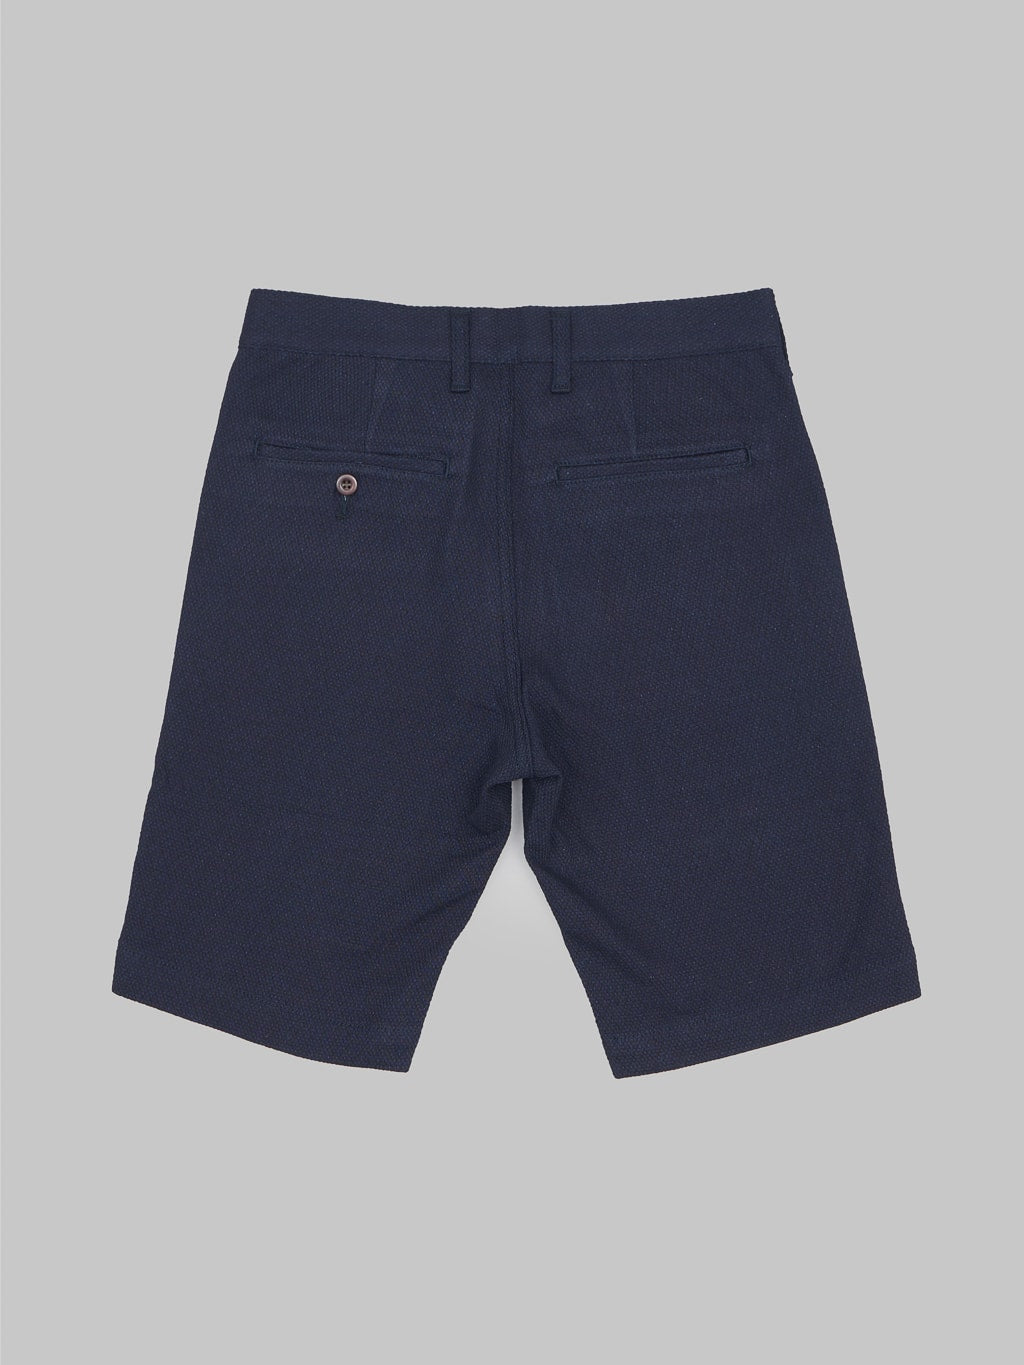 Japan Blue sashiko indigo jacquard shorts back pockets